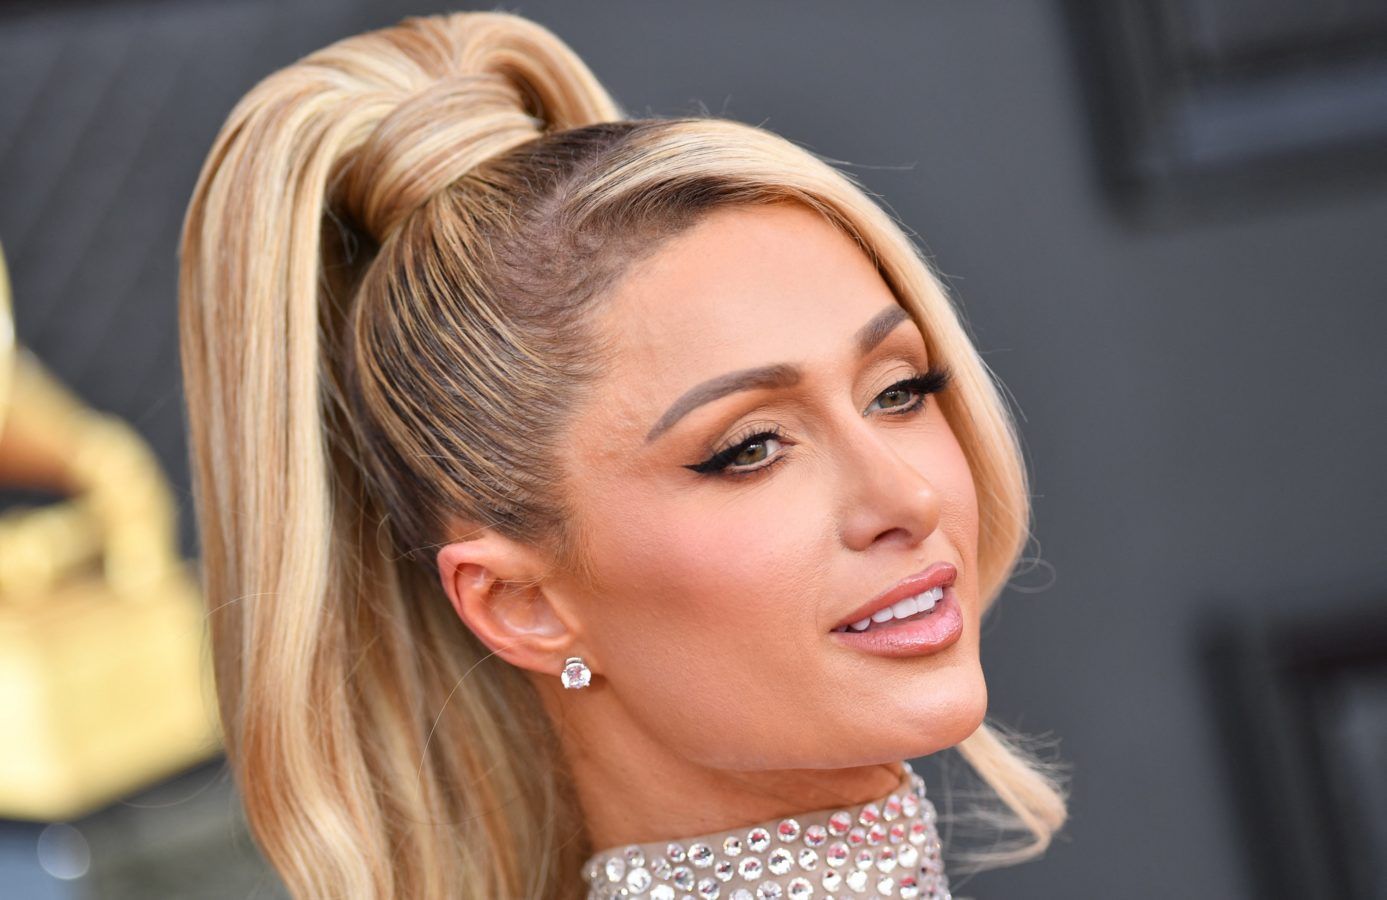 Paris Hilton’s martini glass handbag from the Grammys hits the metaverse